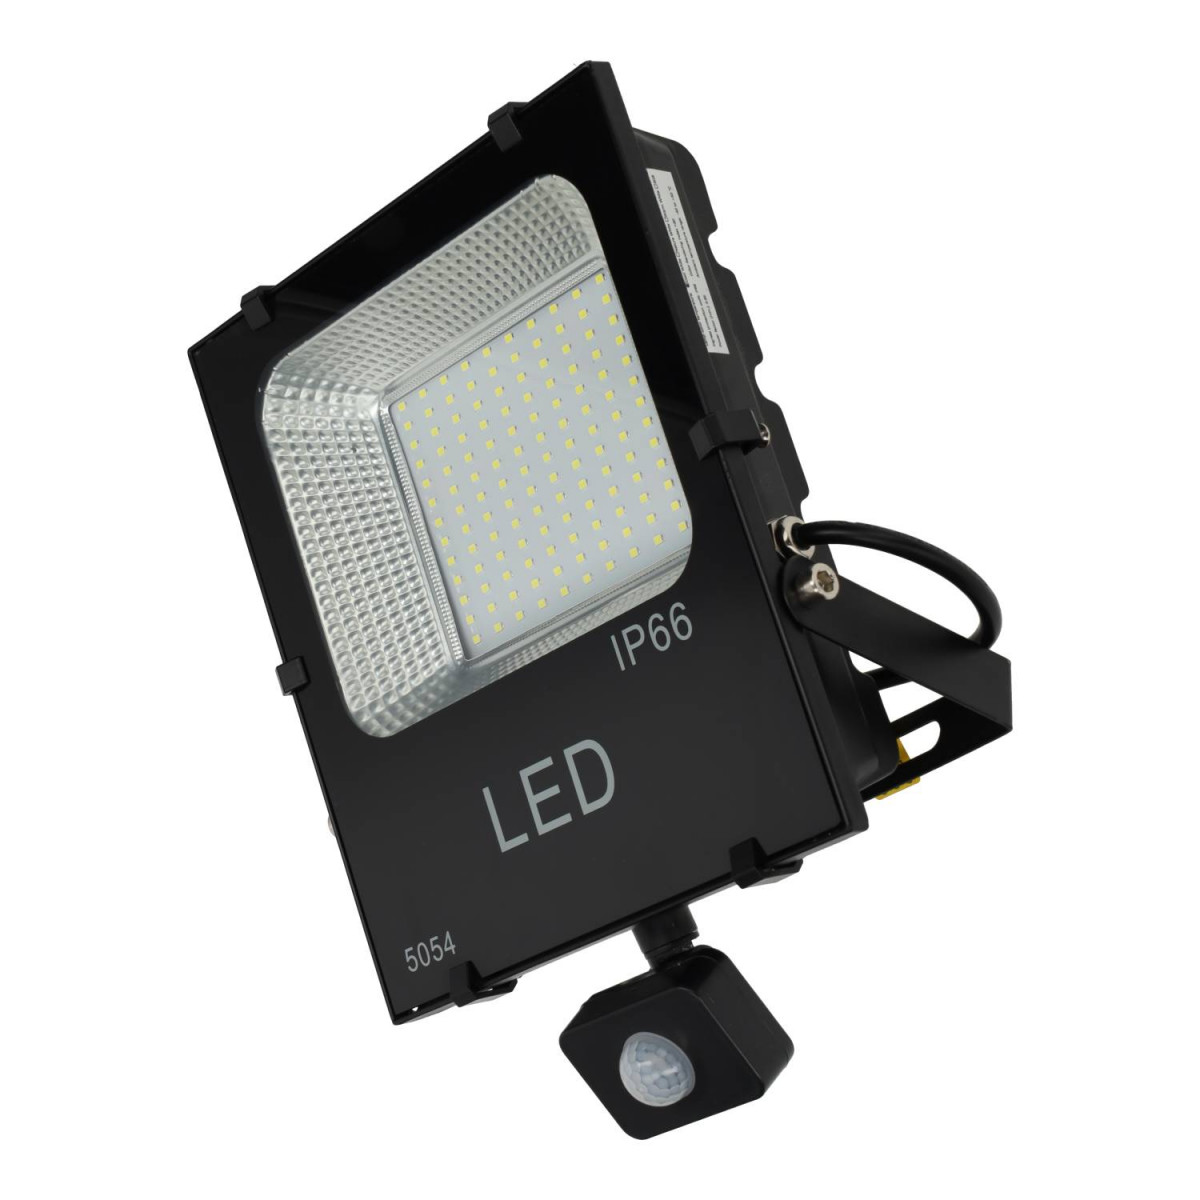 LED Floodlight with motion sensor, 50W